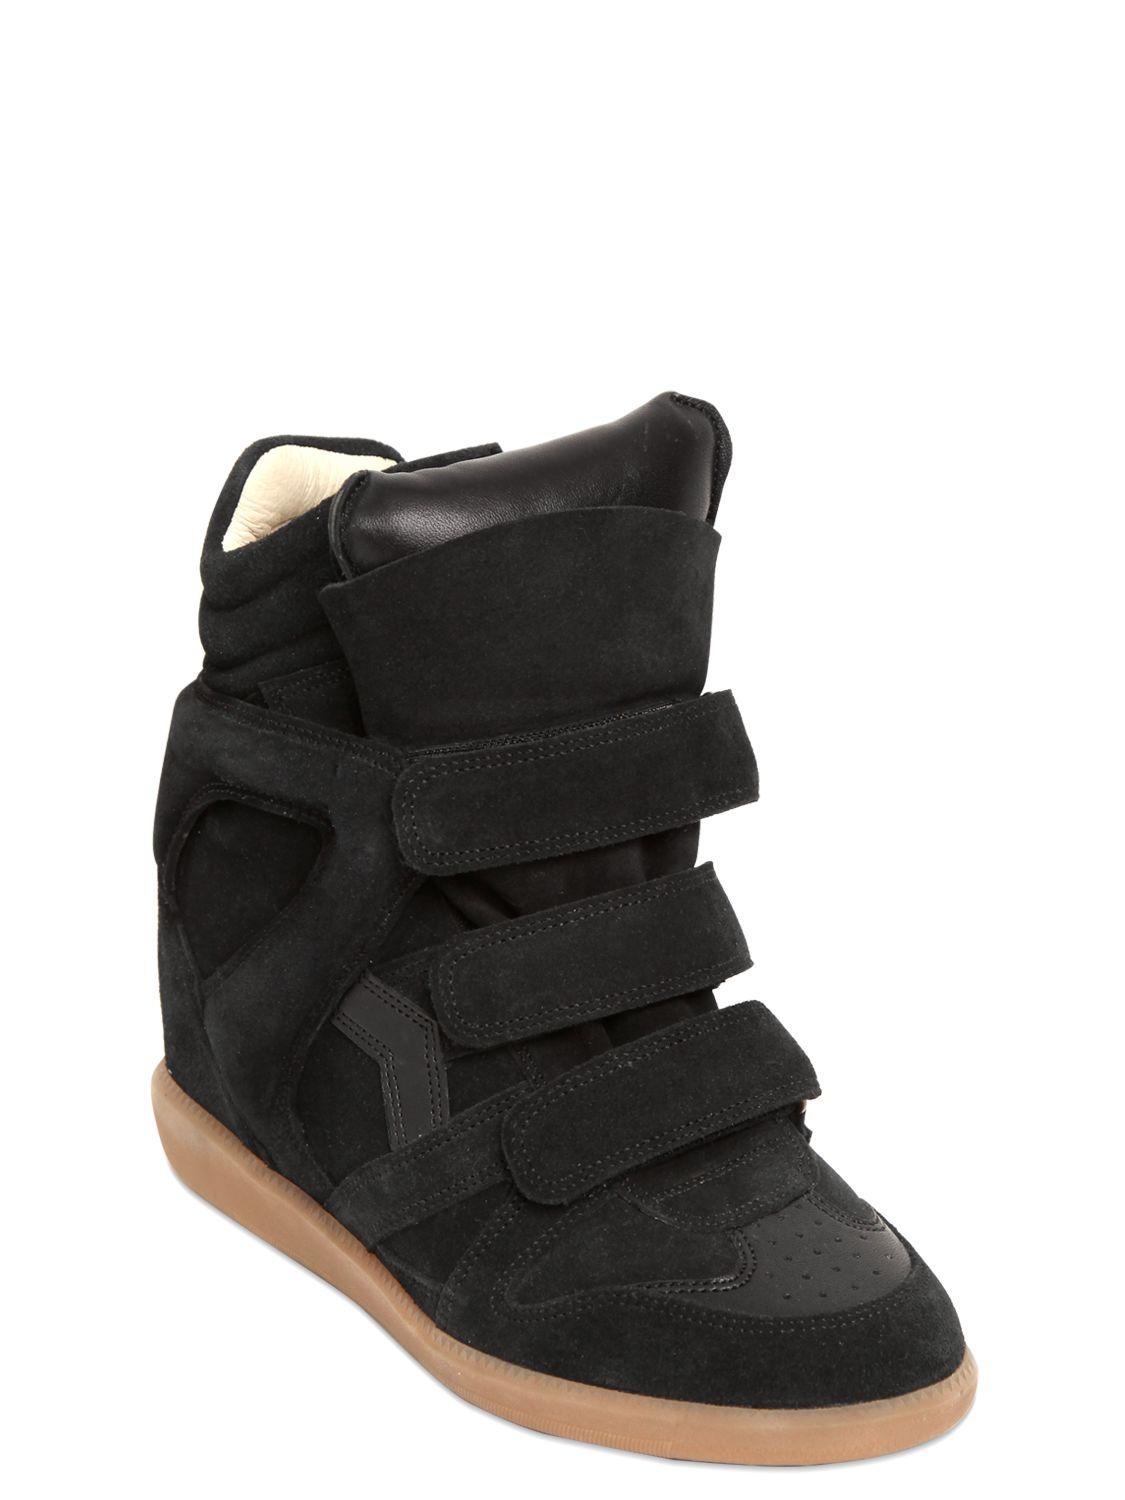 Lyst - Isabel Marant Bekett Sneaker in Black